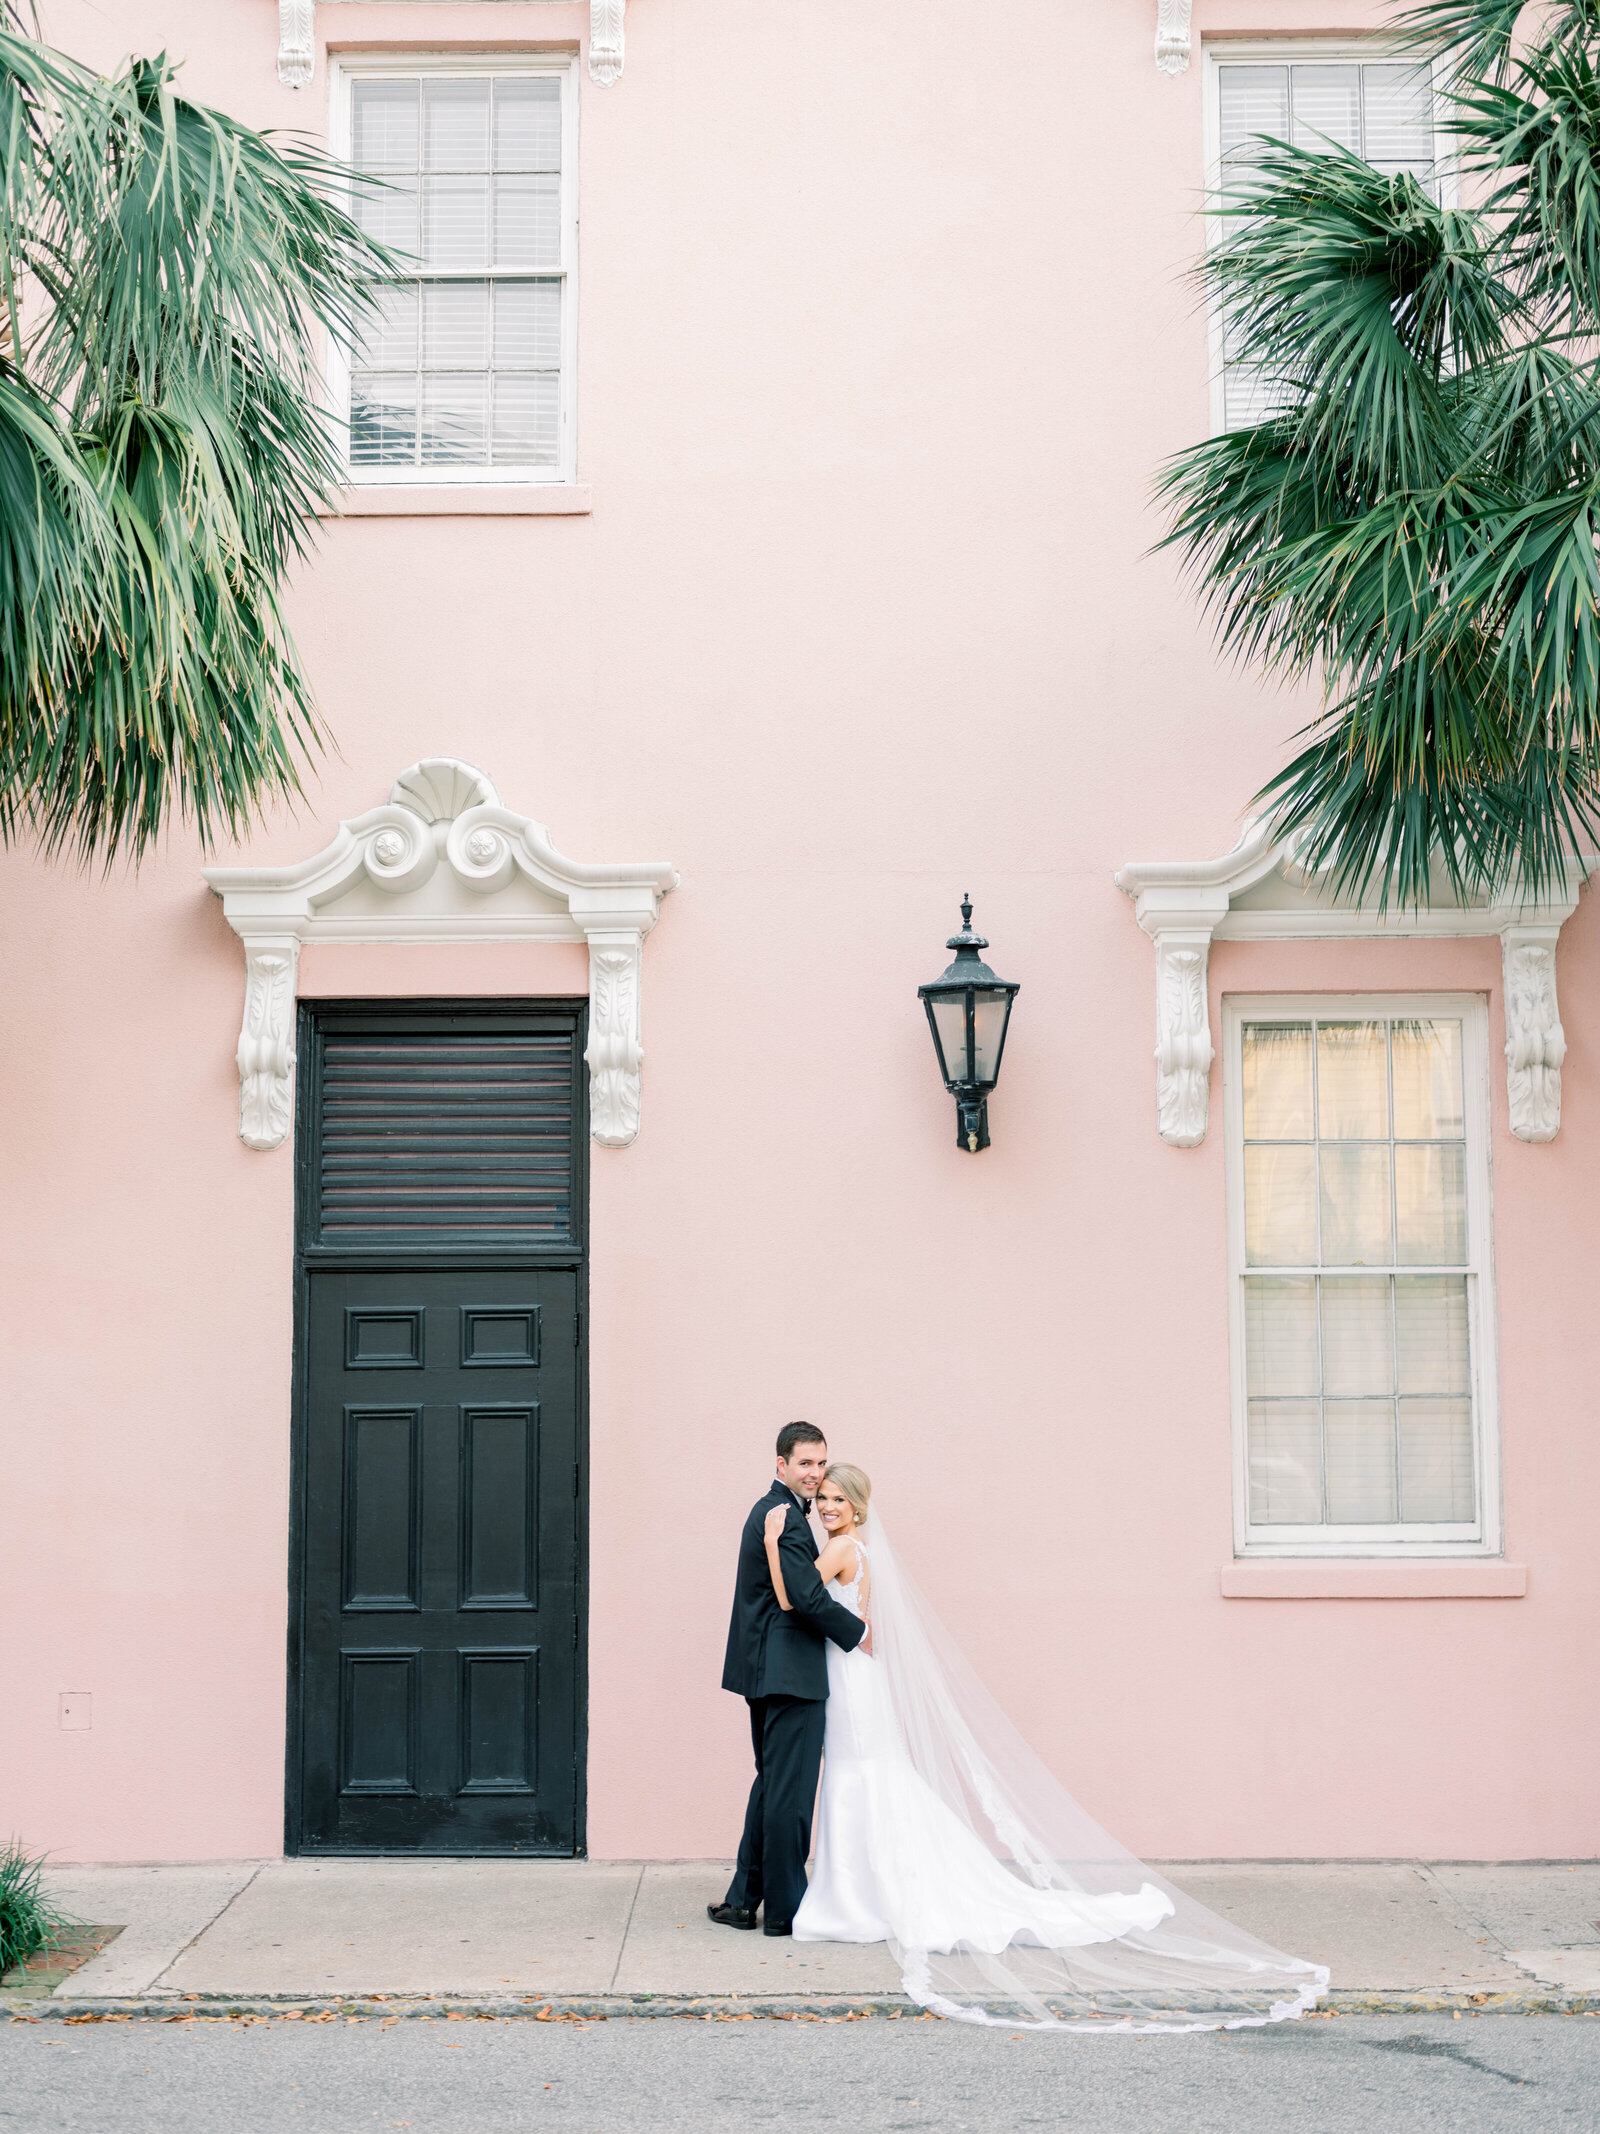 Ashley Spangler Photography International Charleston Destination Fine Art Luxury Wedding Engagement Photographer Light Airy Film Artful Images Imagery Award Winning Photographer Photos8